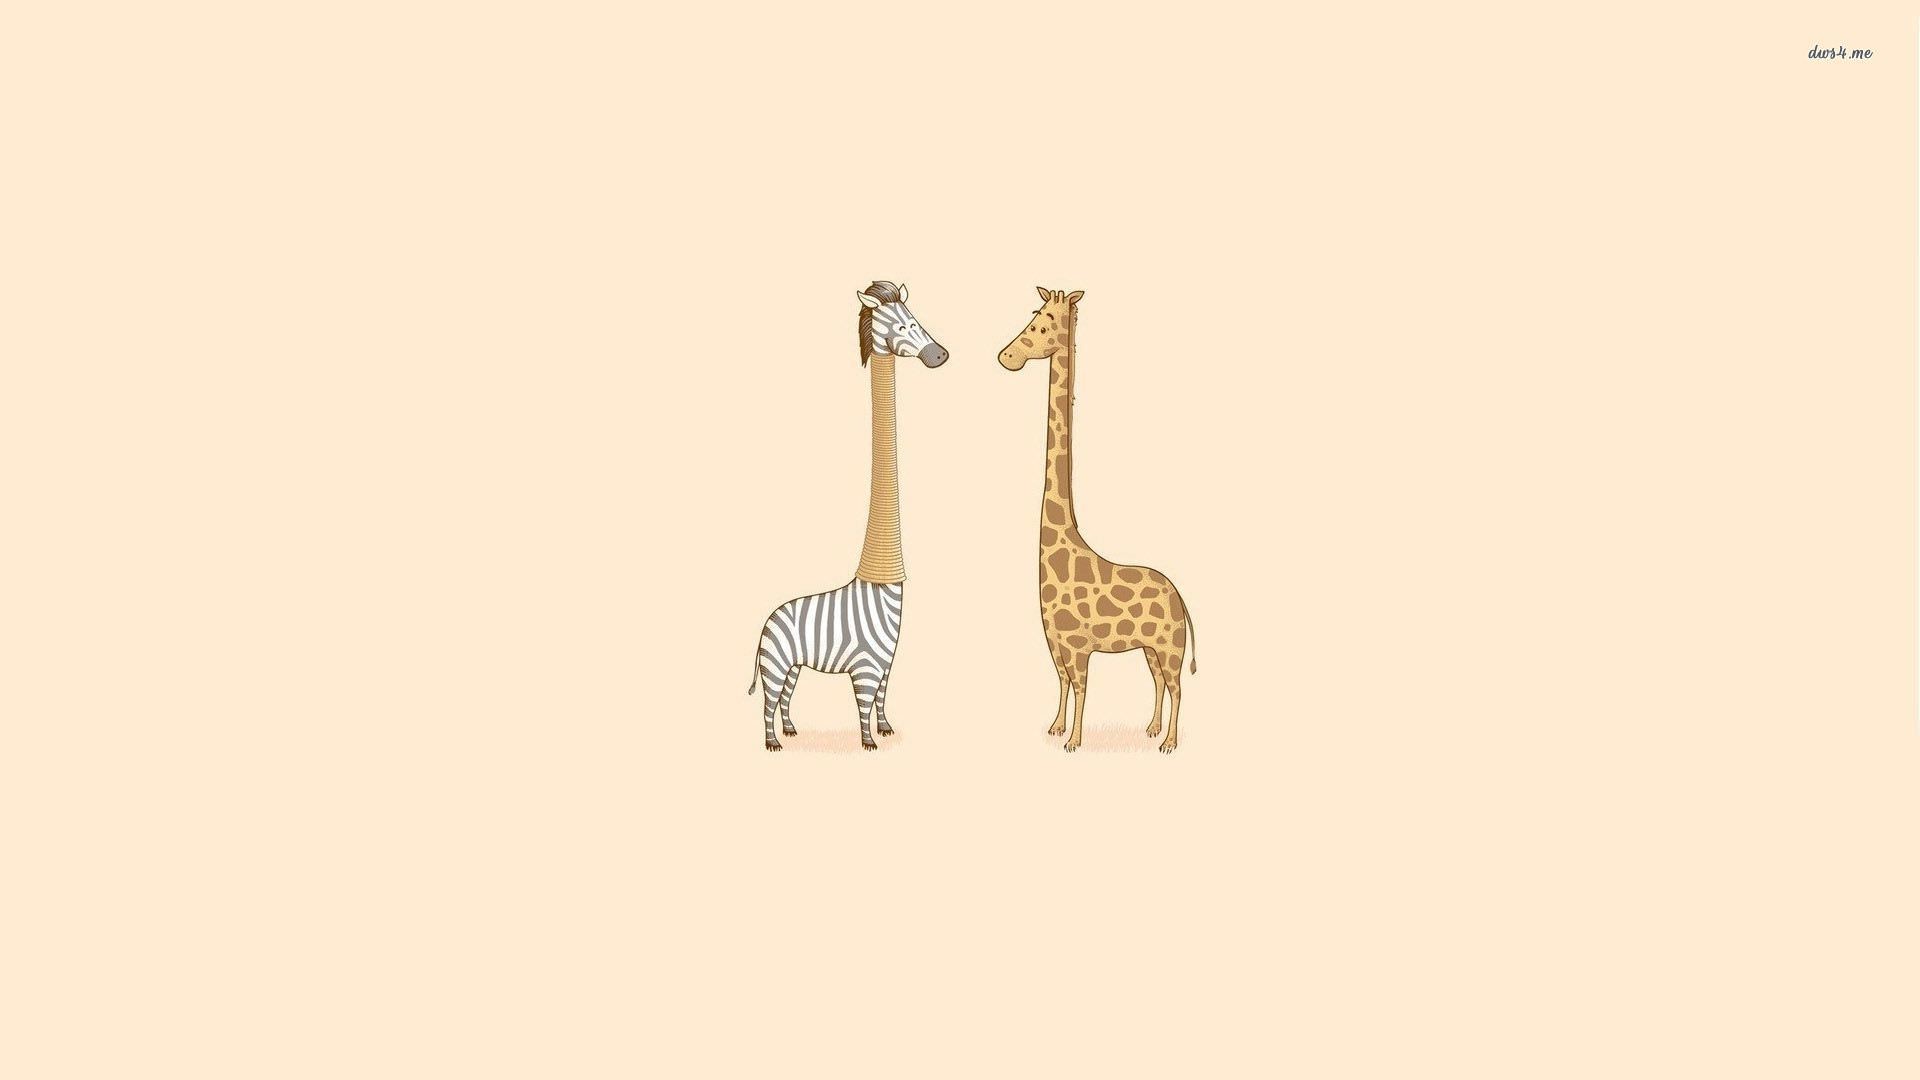 Cute Giraffe Wallpapers